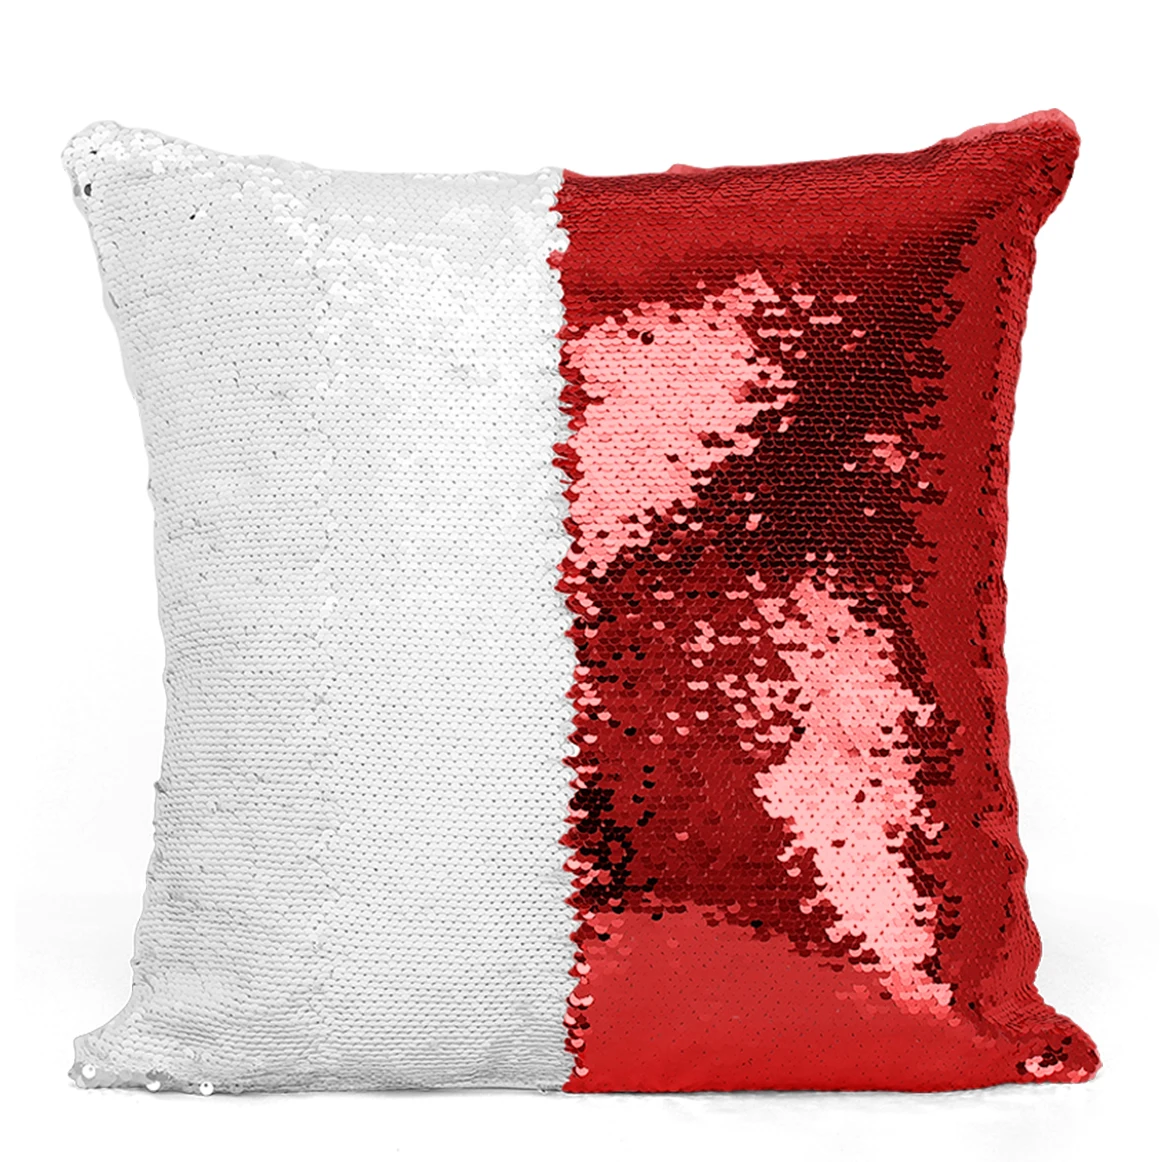 Post Malone аксессуары для украшения дома подушки для подарка фото наволочки вентиляторы - Цвет: red white